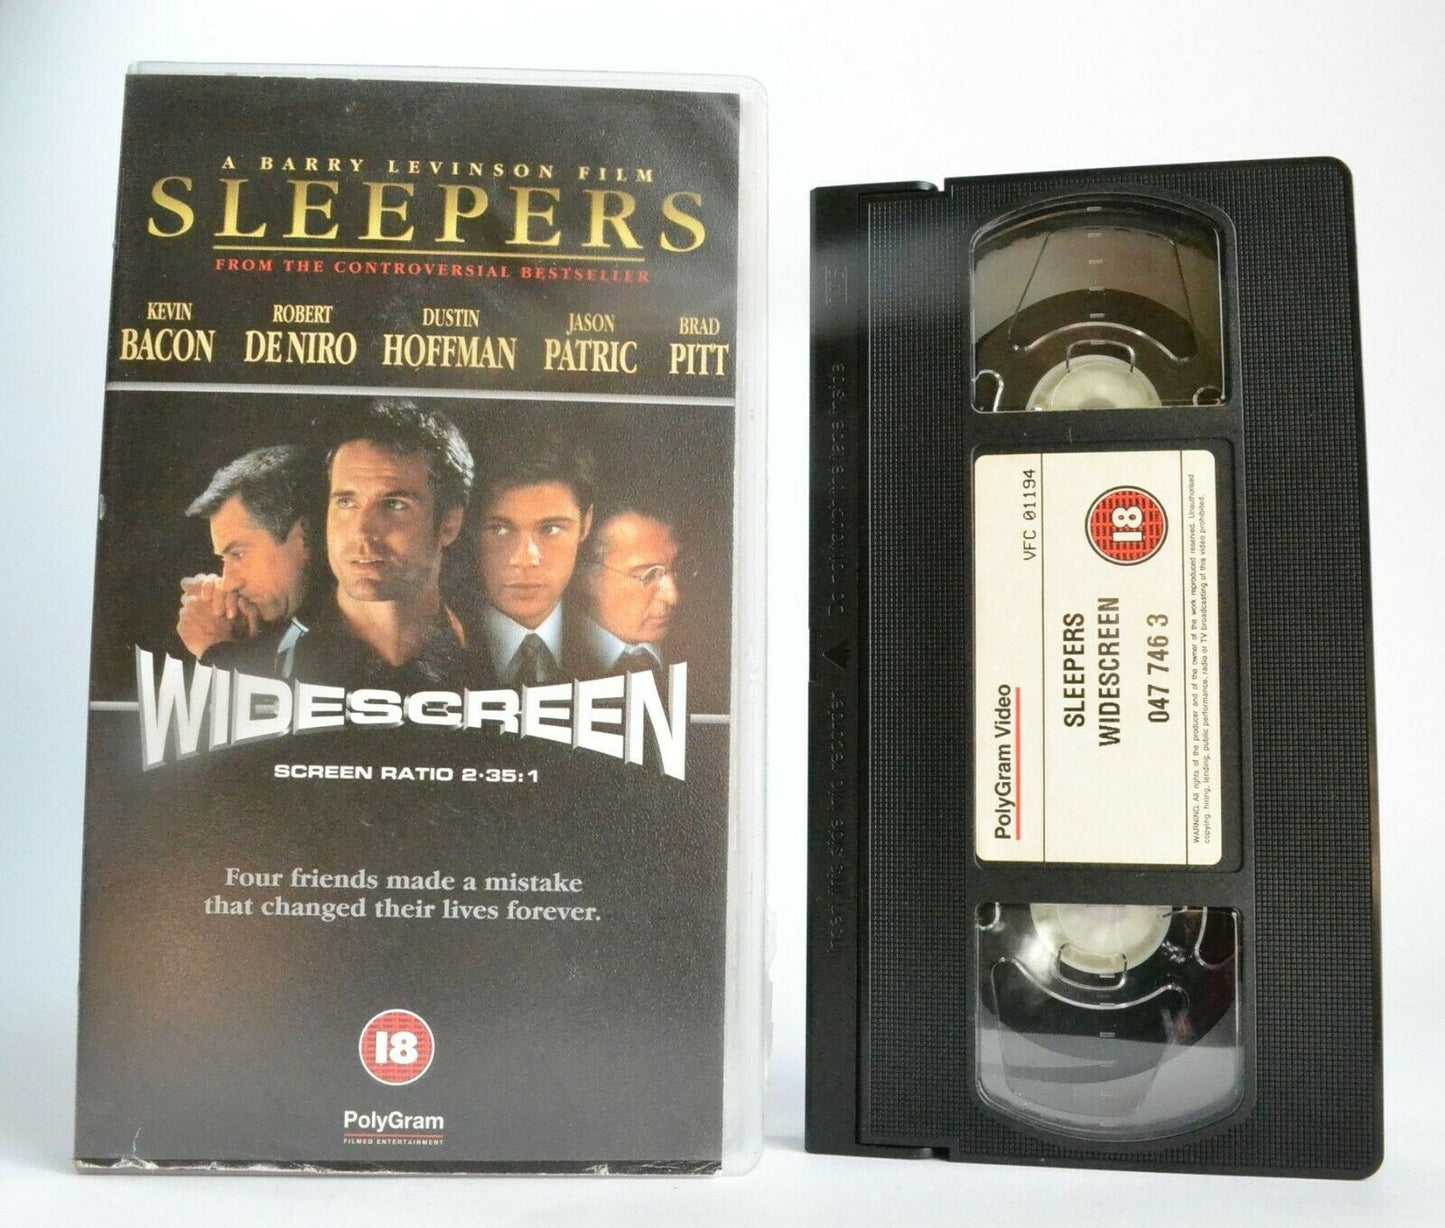 Sleepers (Widescreen): Lorenzo Carcaterra Novel -Deniro/Pitt/Bacon- Drama - VHS-